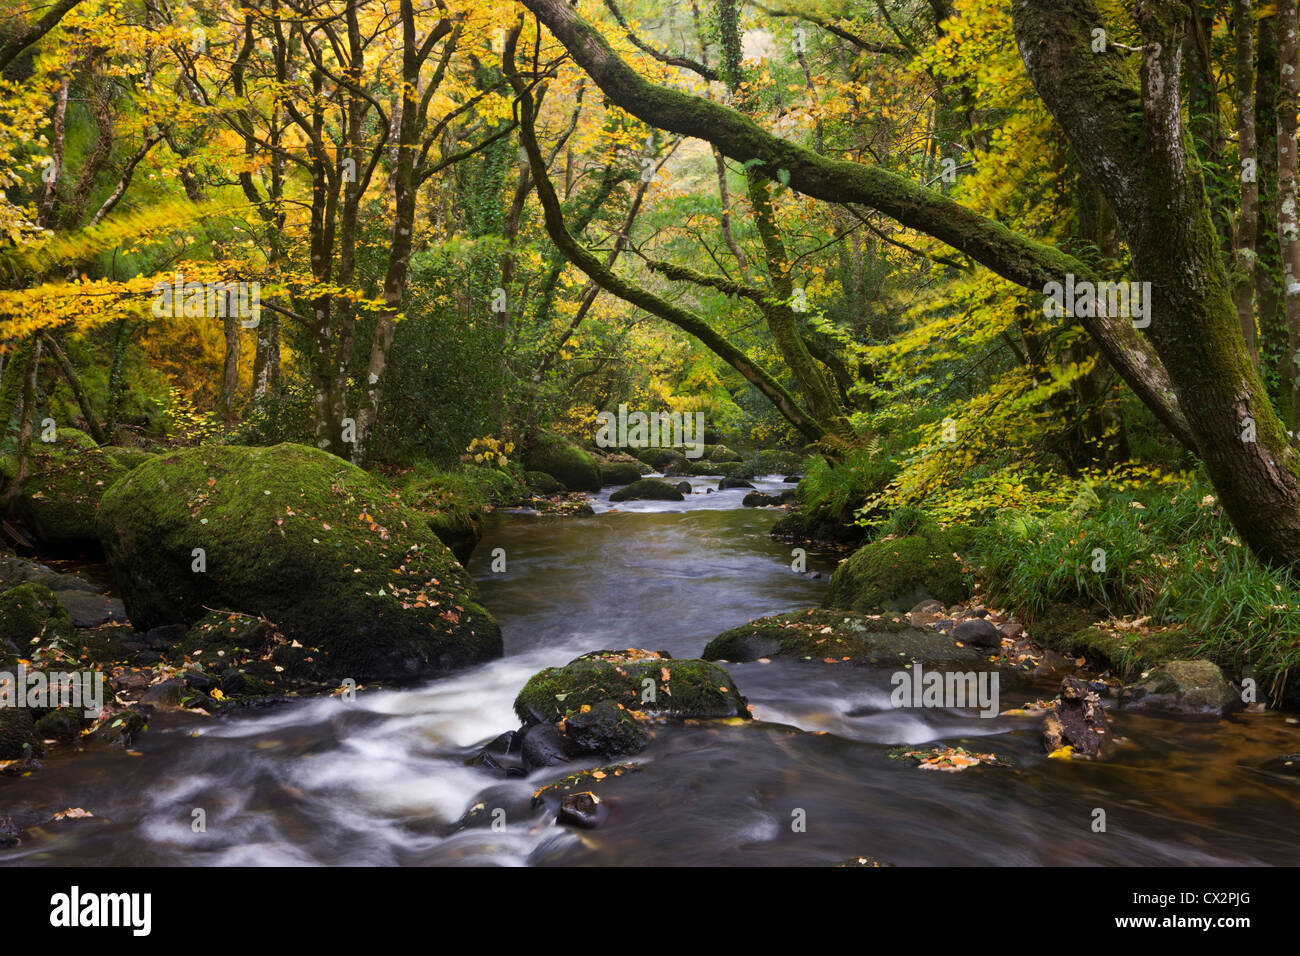 River Teign flowing through deciduous woodland, Dartmoor, Devon, England. Autumn (October) 2010. Stock Photo